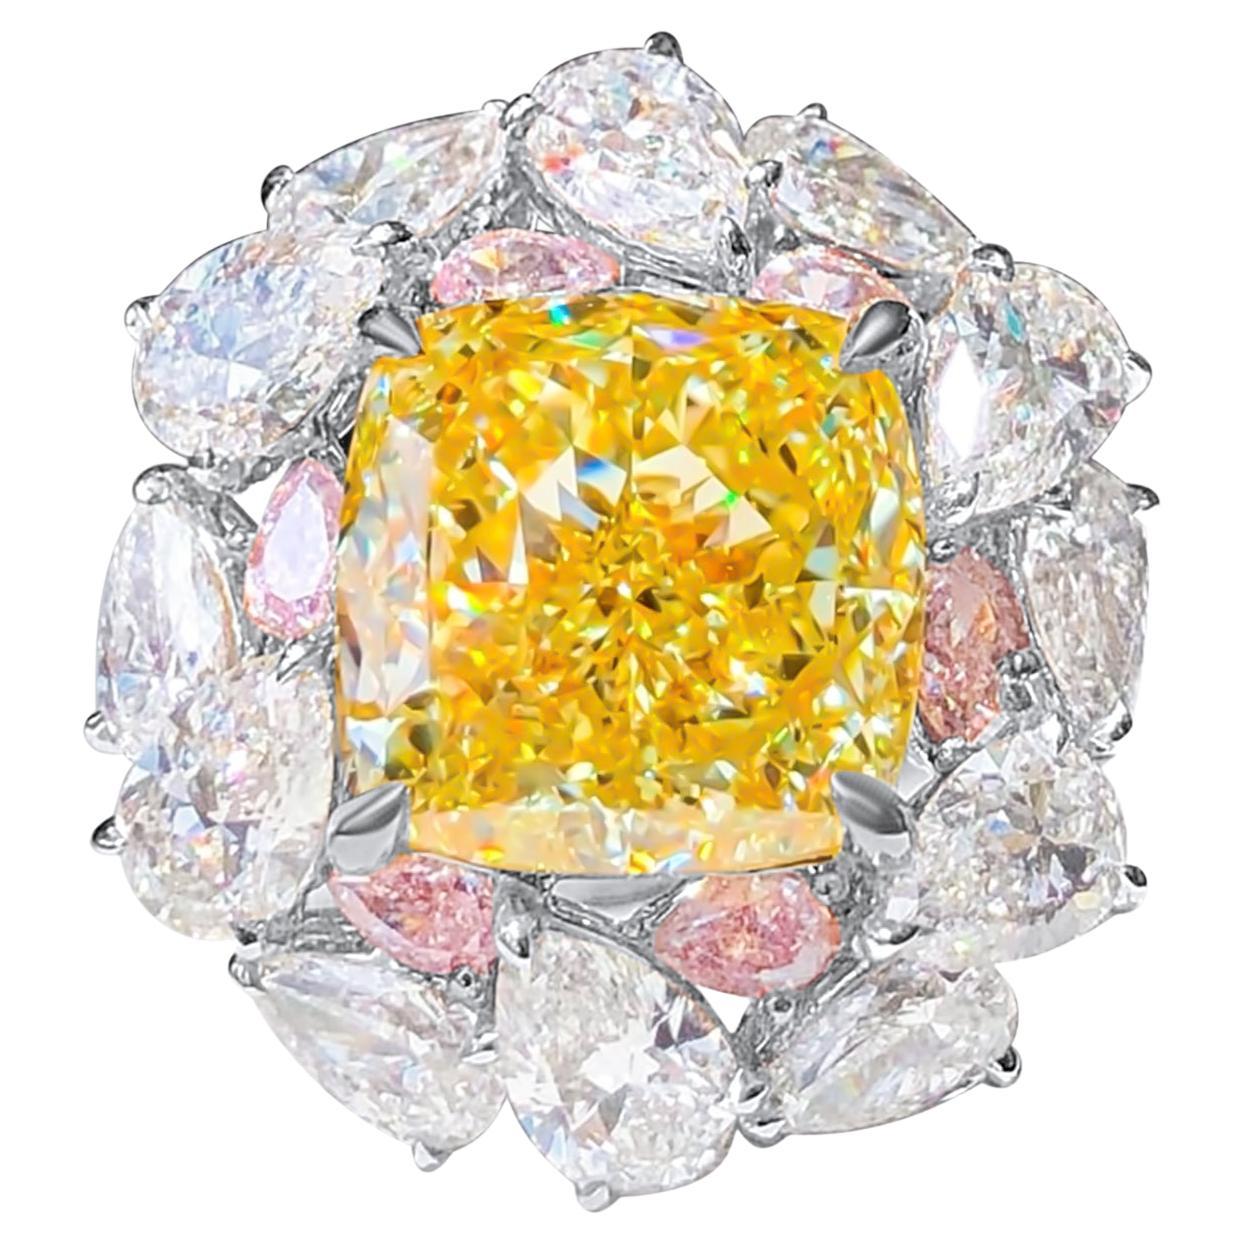 7.01 Carat Intense Yellow Cushion Cut Diamond Ring GIA Certified